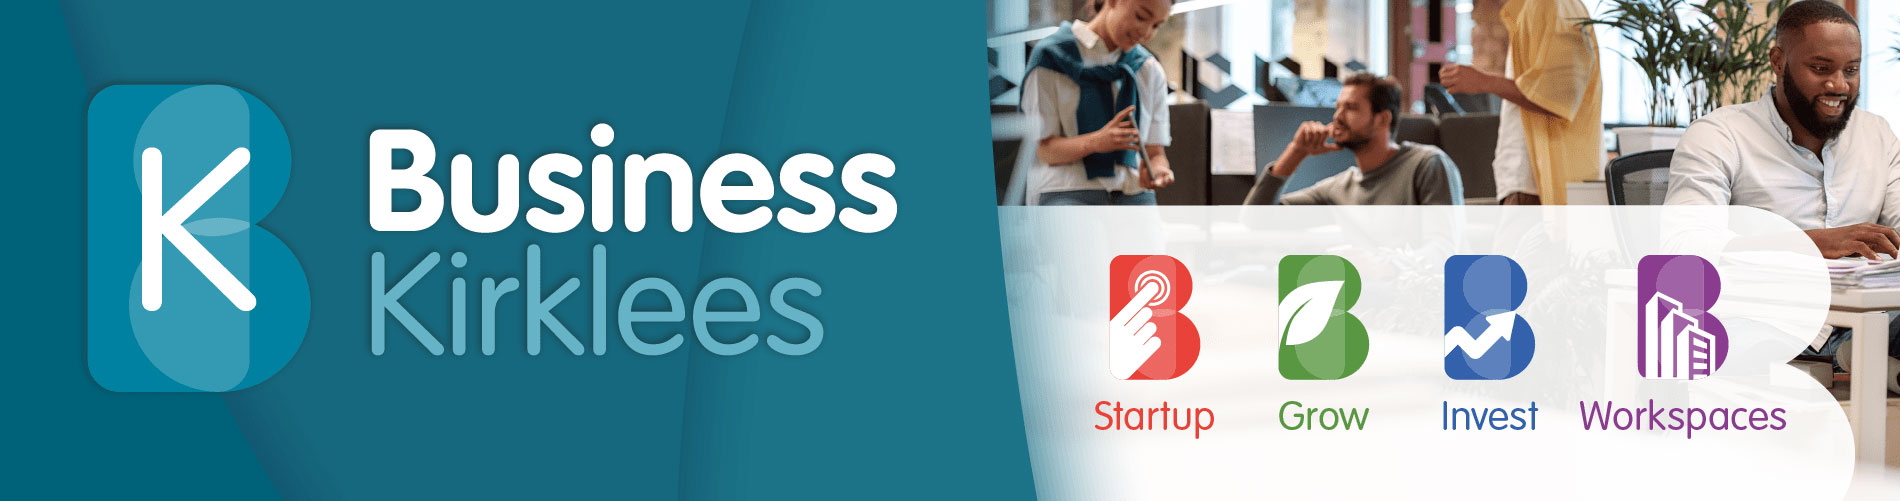 Business Kirklees. Startup, Grow, Invest, Workspaces.